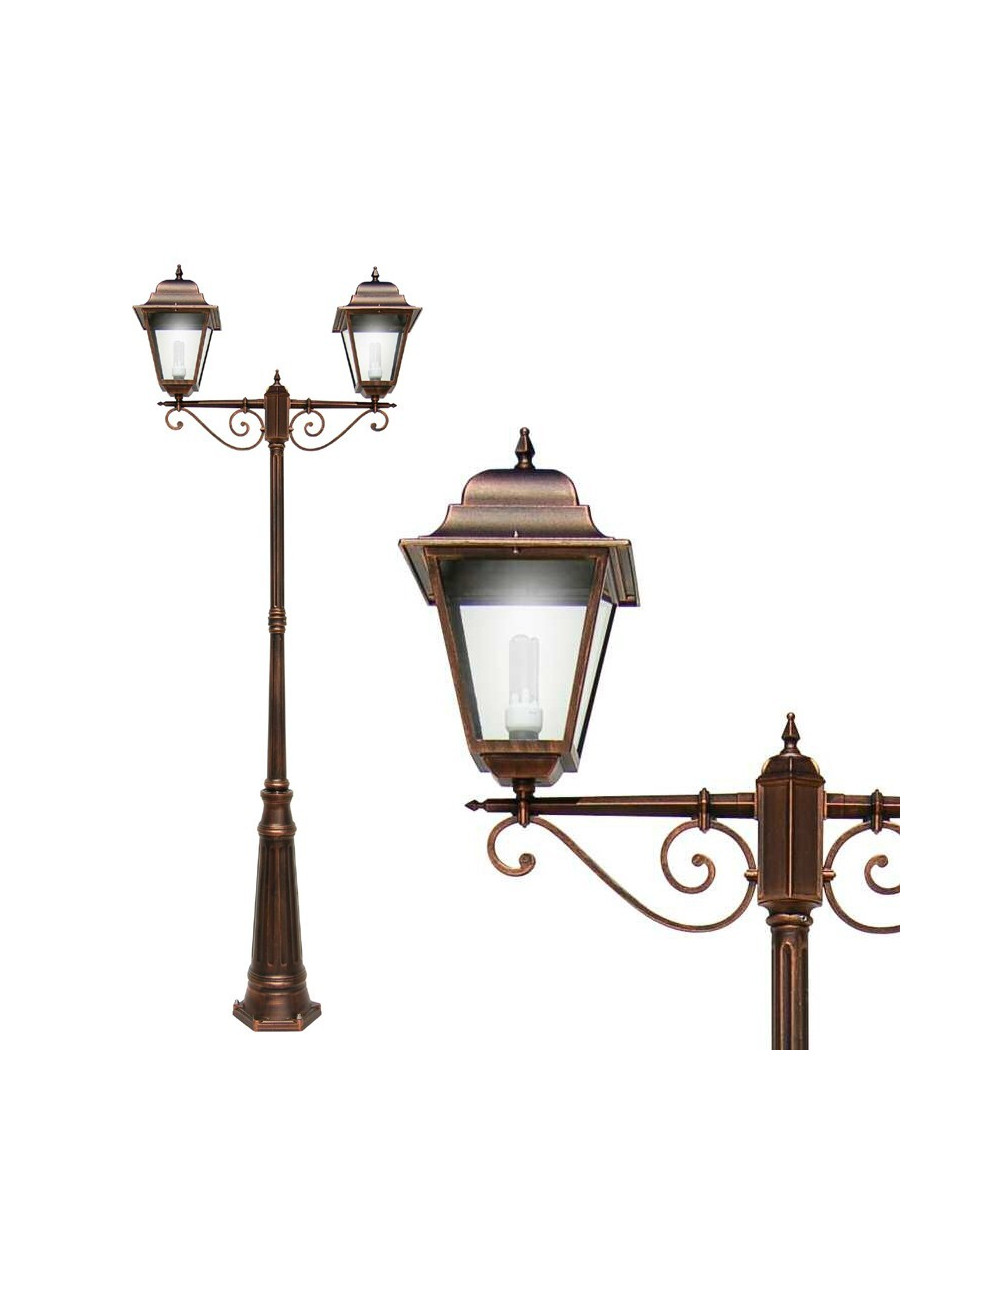 ATHENA GRANDE Square pole street lamp classic outdoor lighting